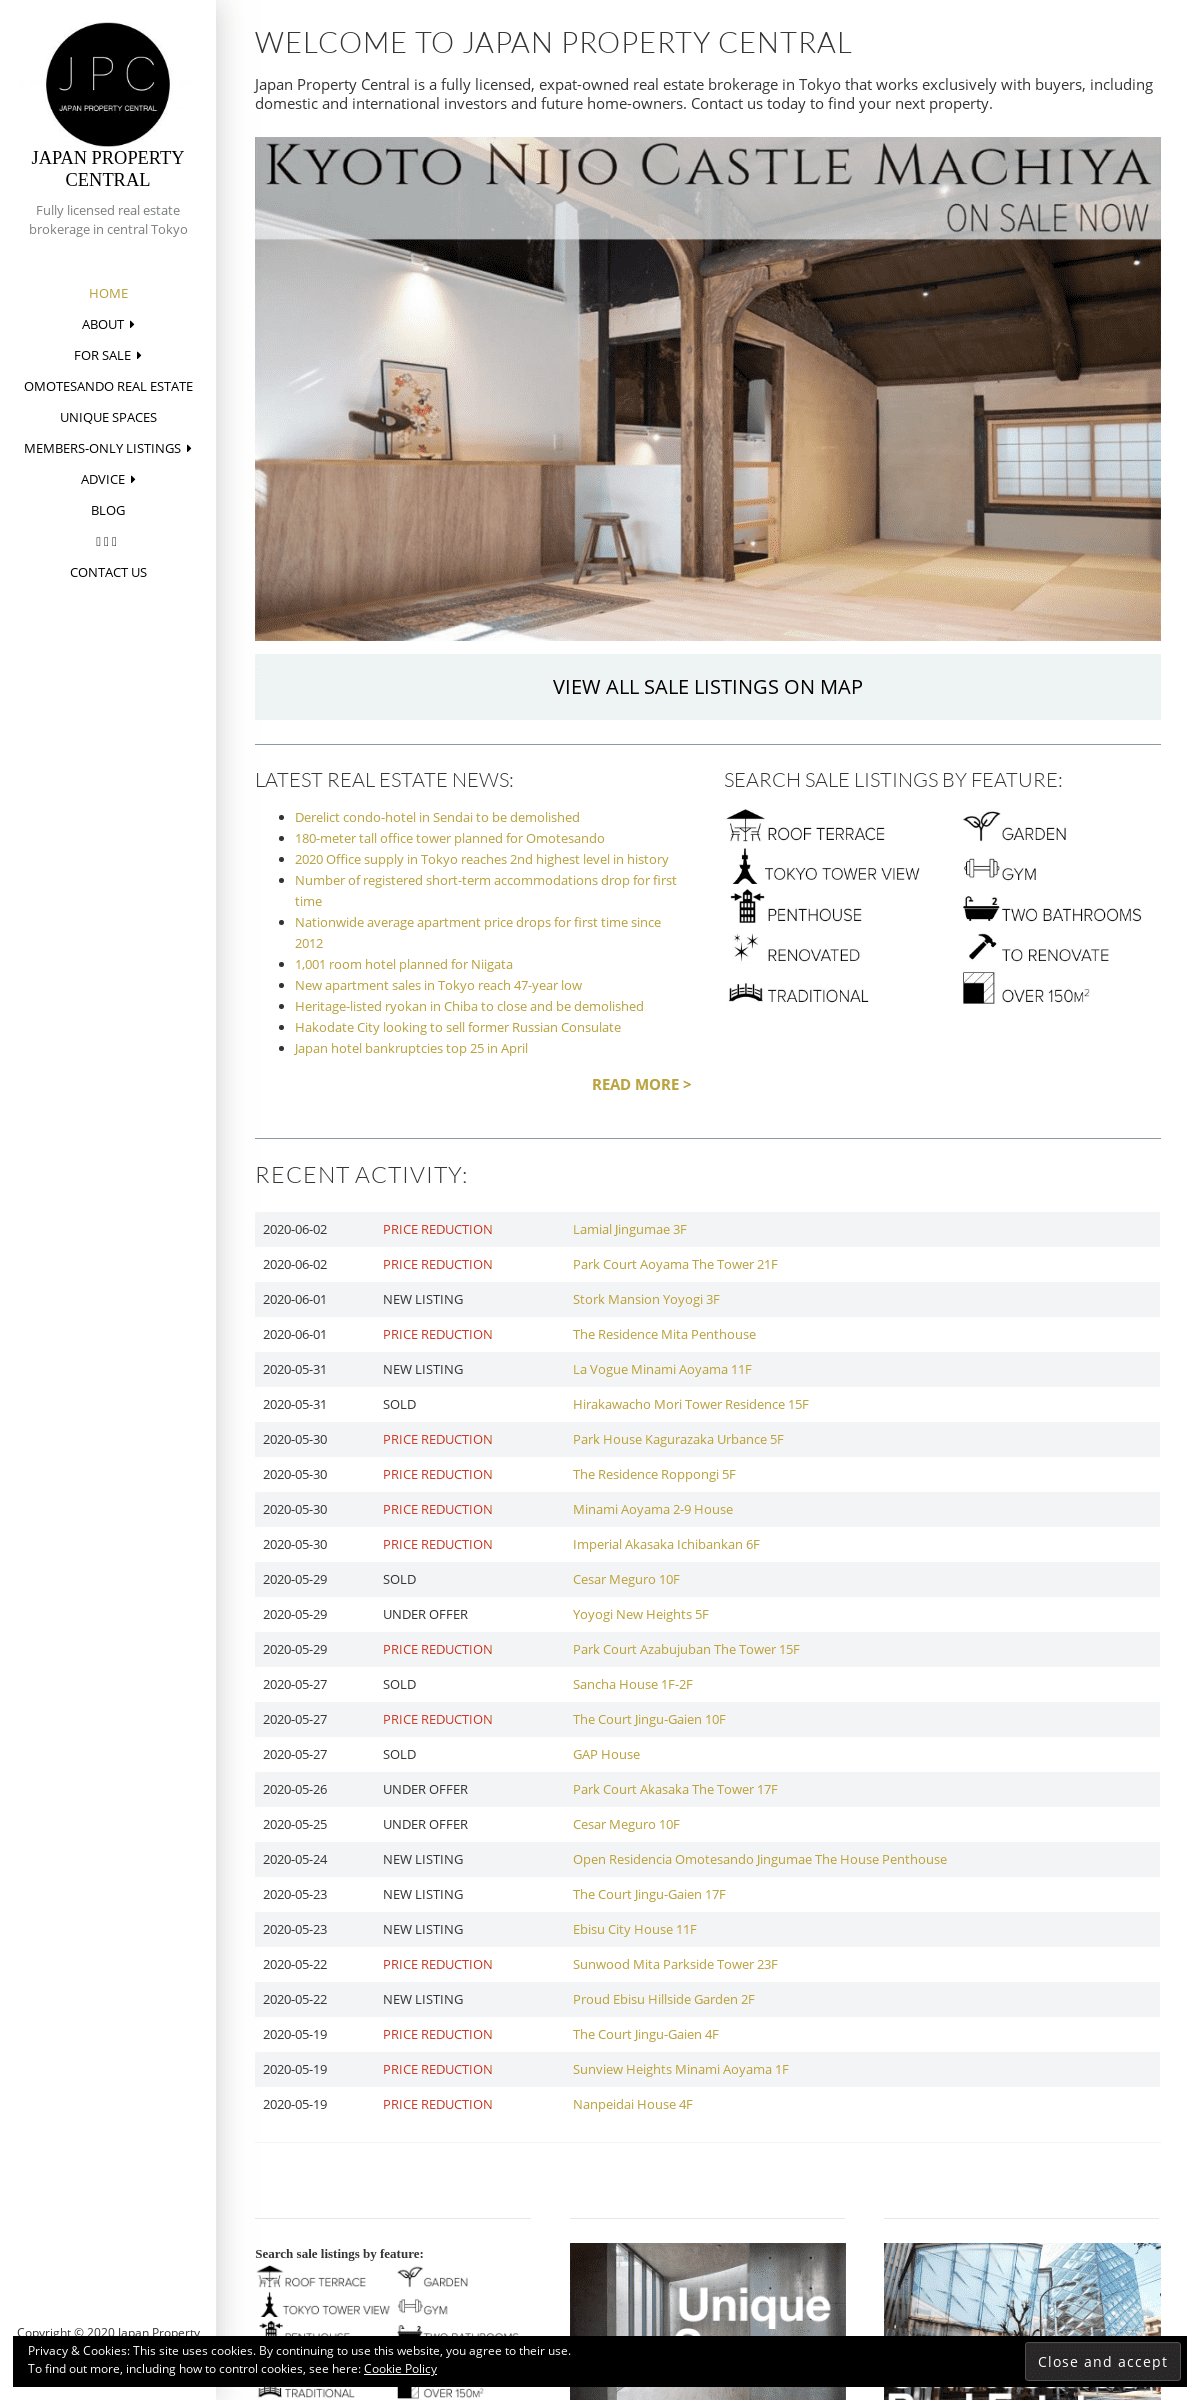 A complete backup of japanpropertycentral.com